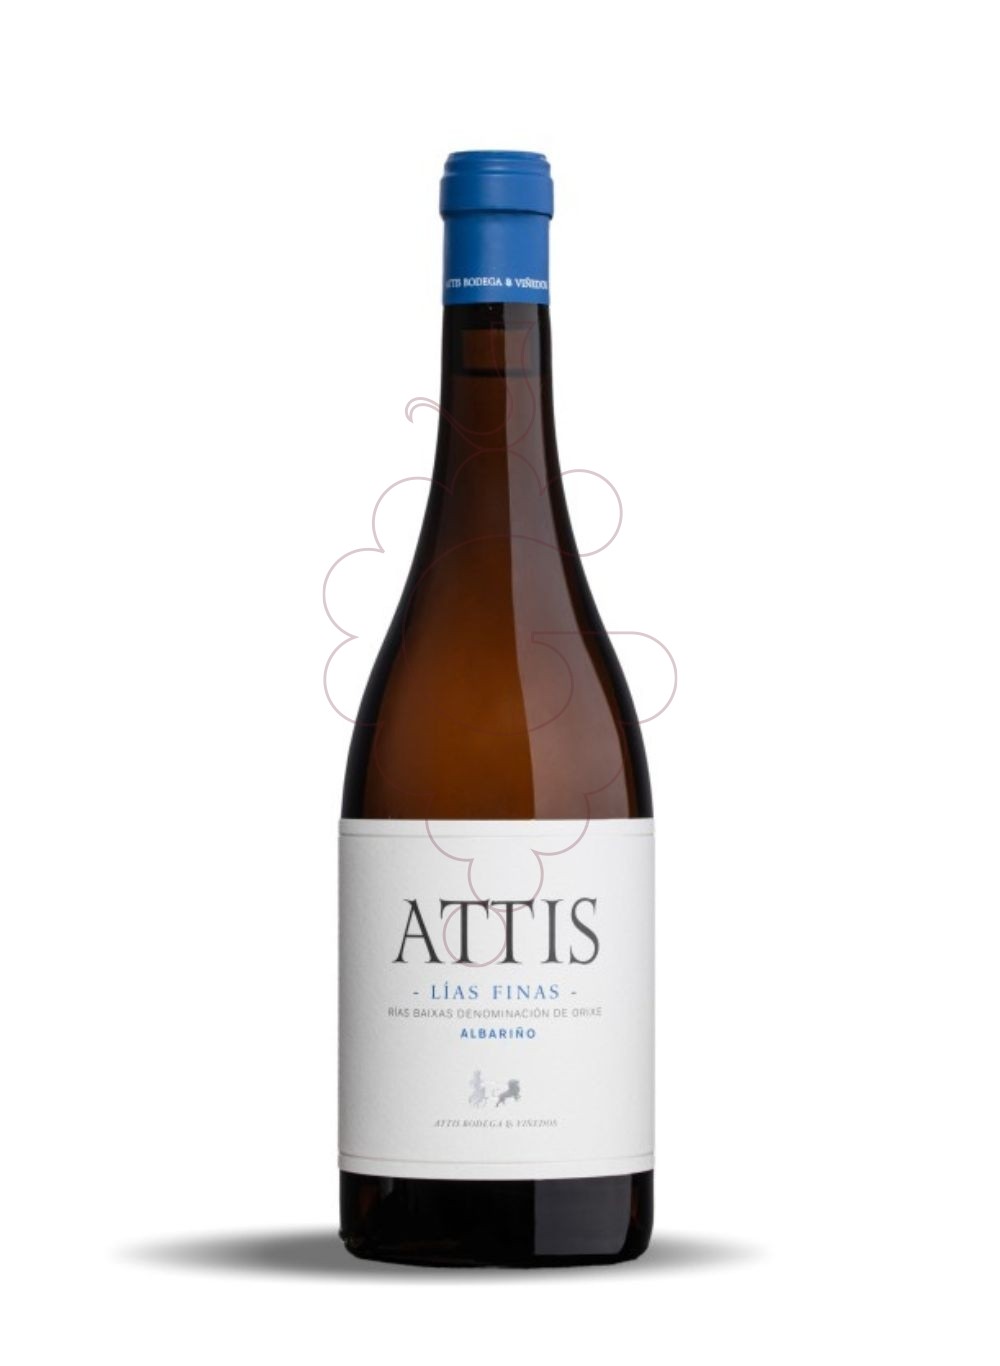 Photo Attis albari?o lias finas 75 c vin blanc